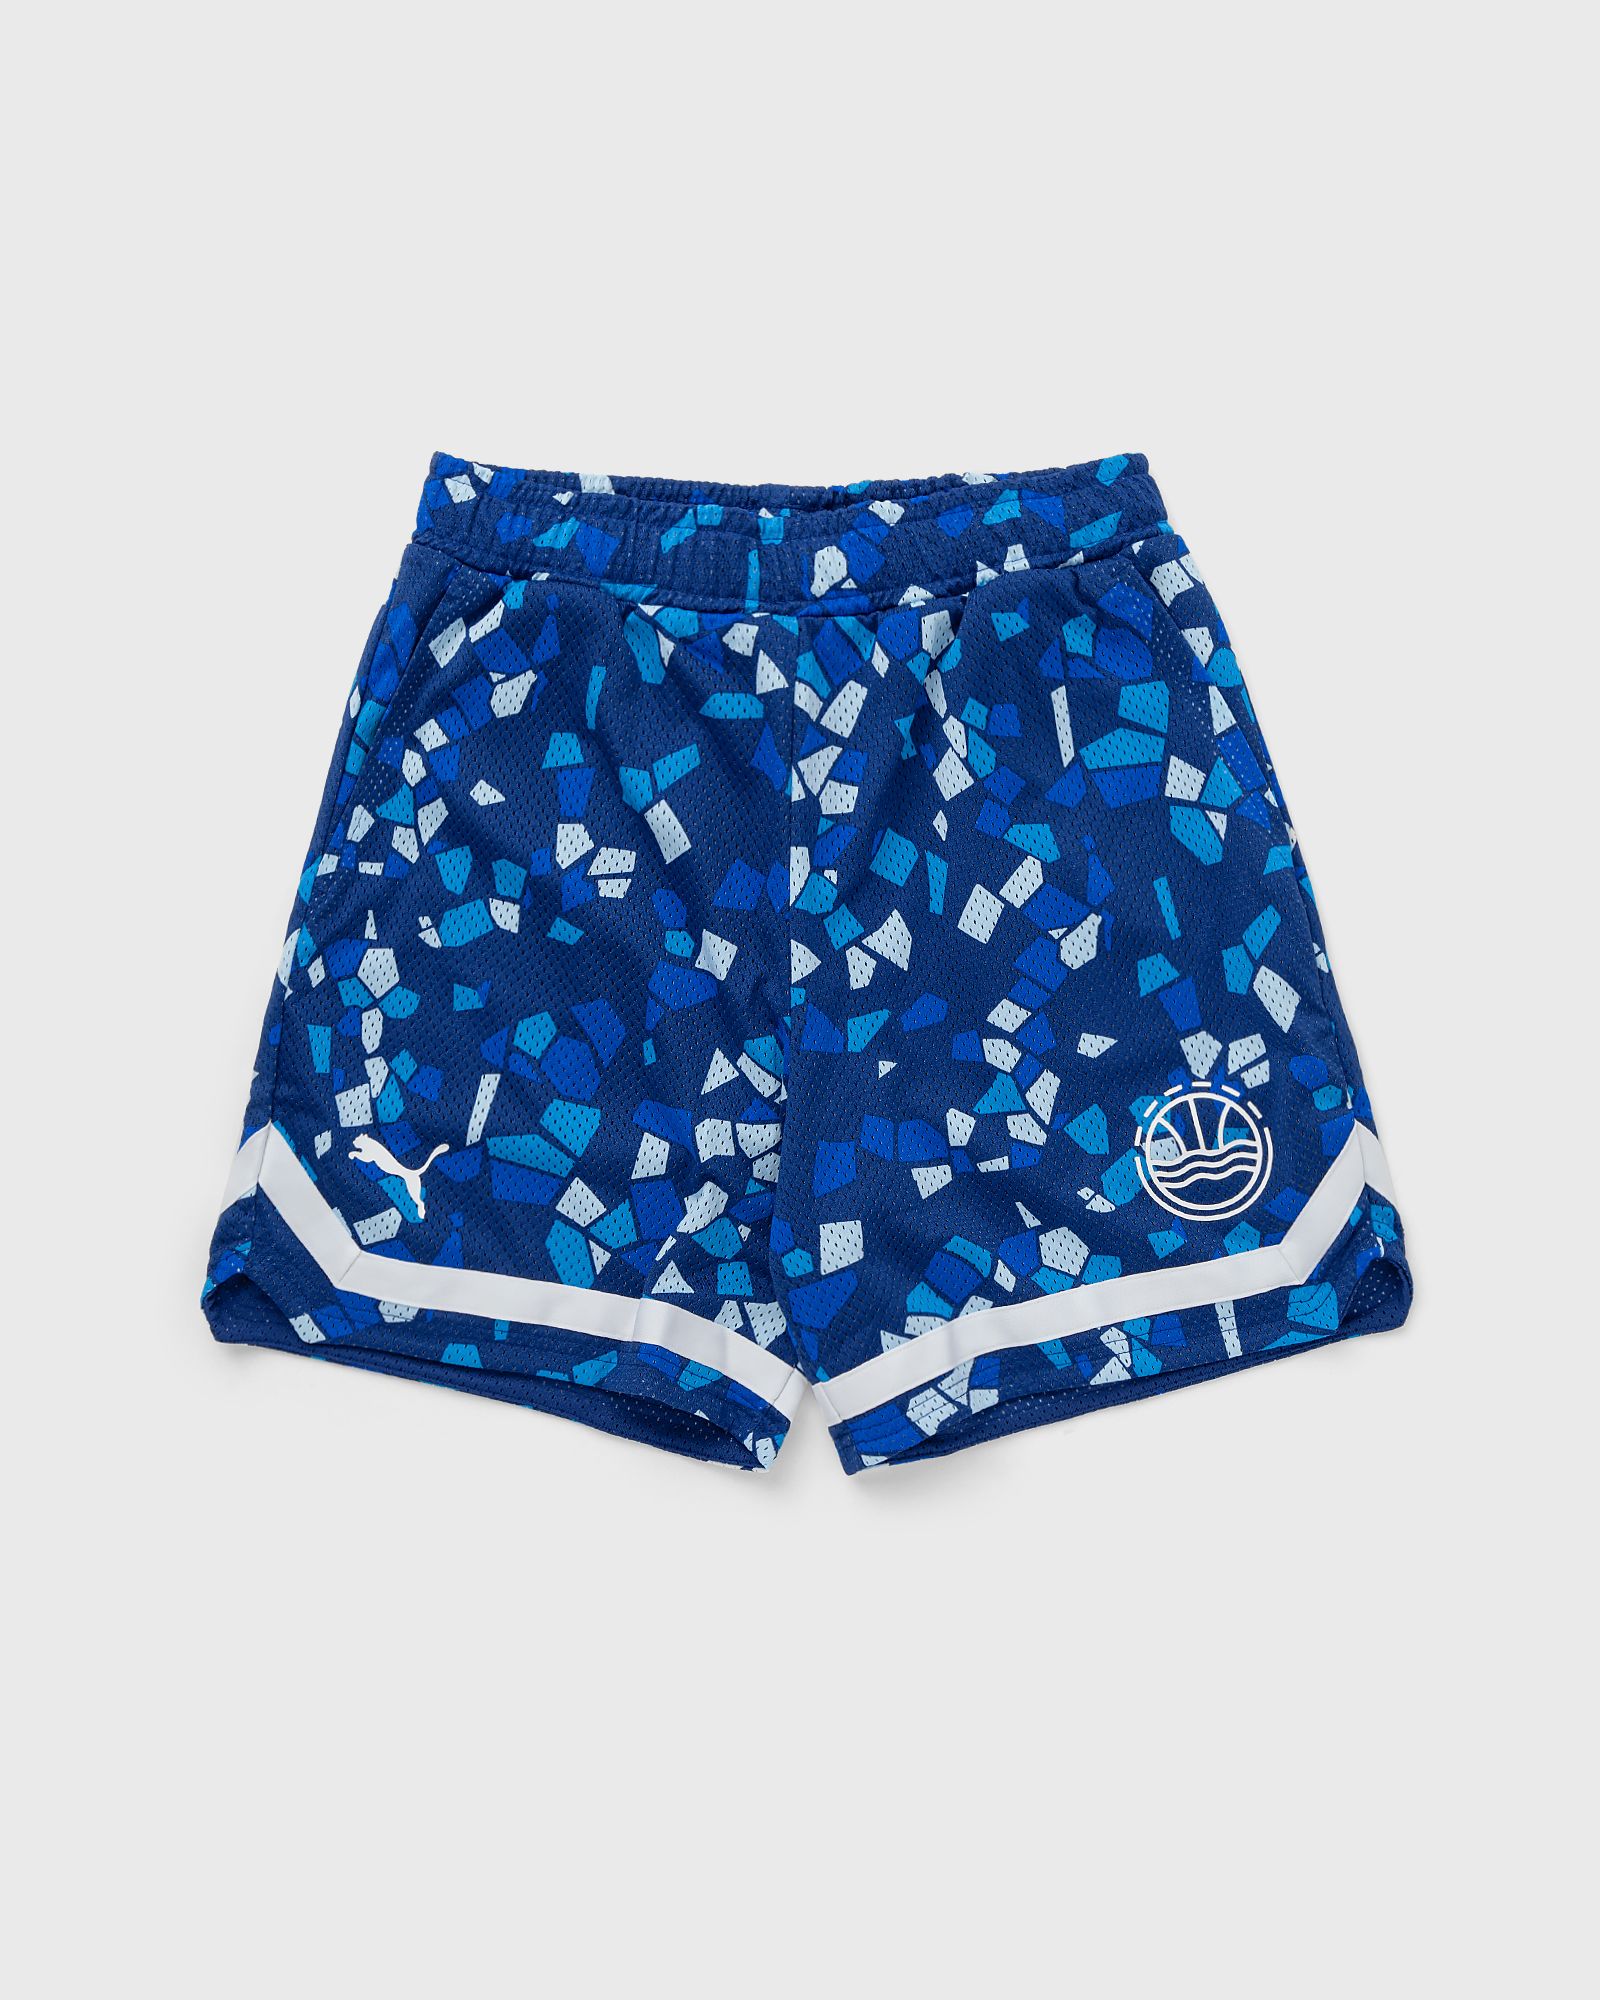 Puma - venice beach league short men sport & team shorts blue in größe:xl